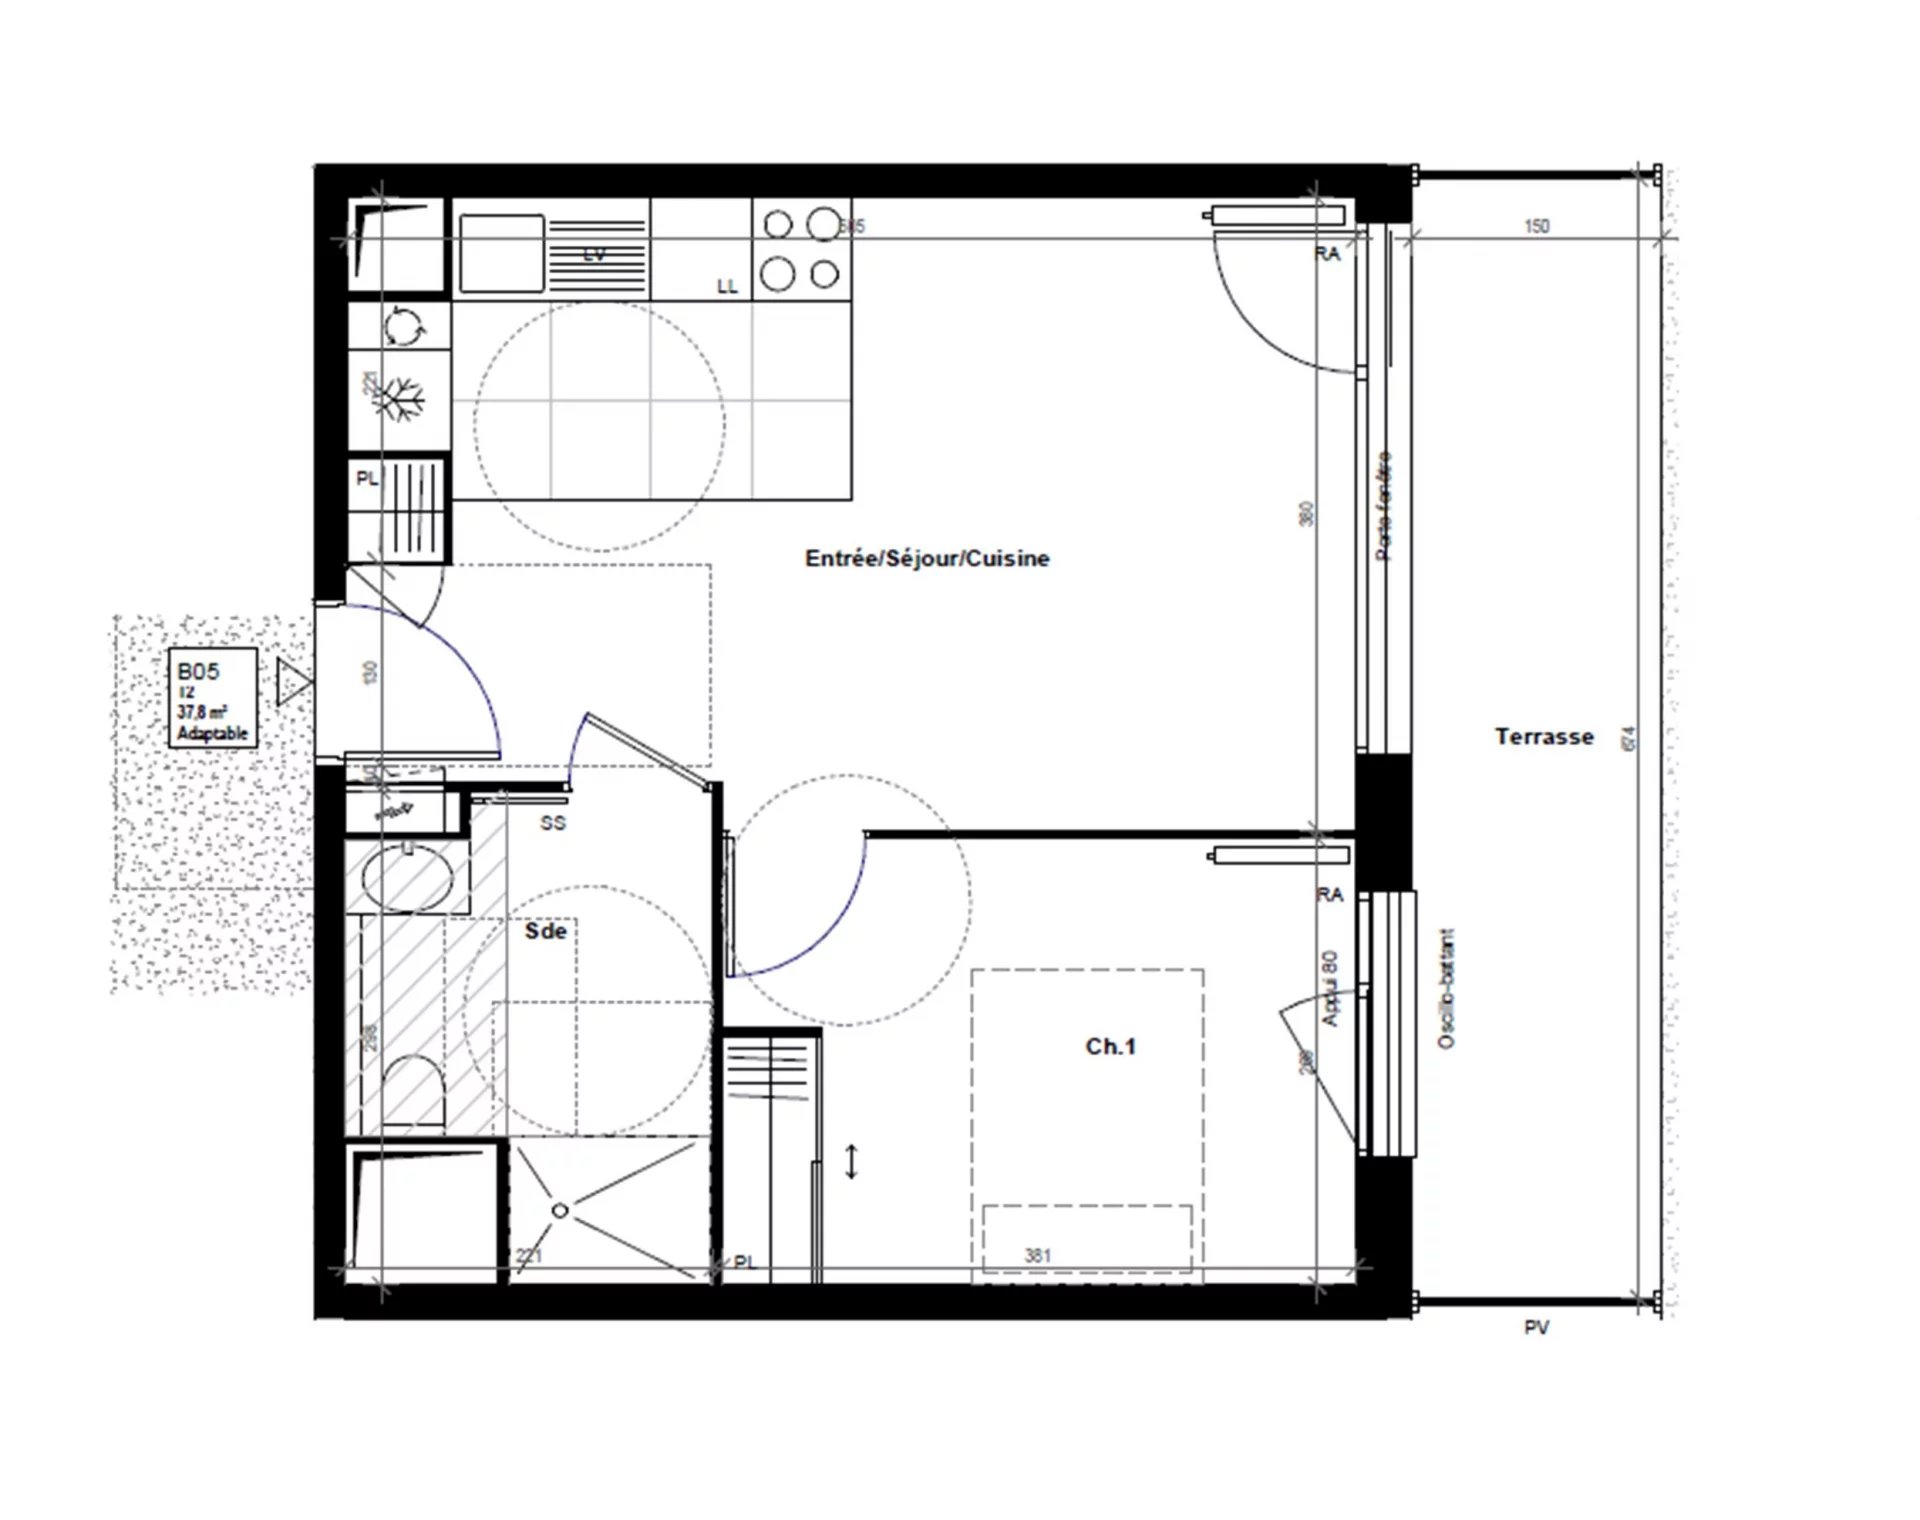 T2 neuf  - 37.8m² - 1 chambre  - terrasse 10m²